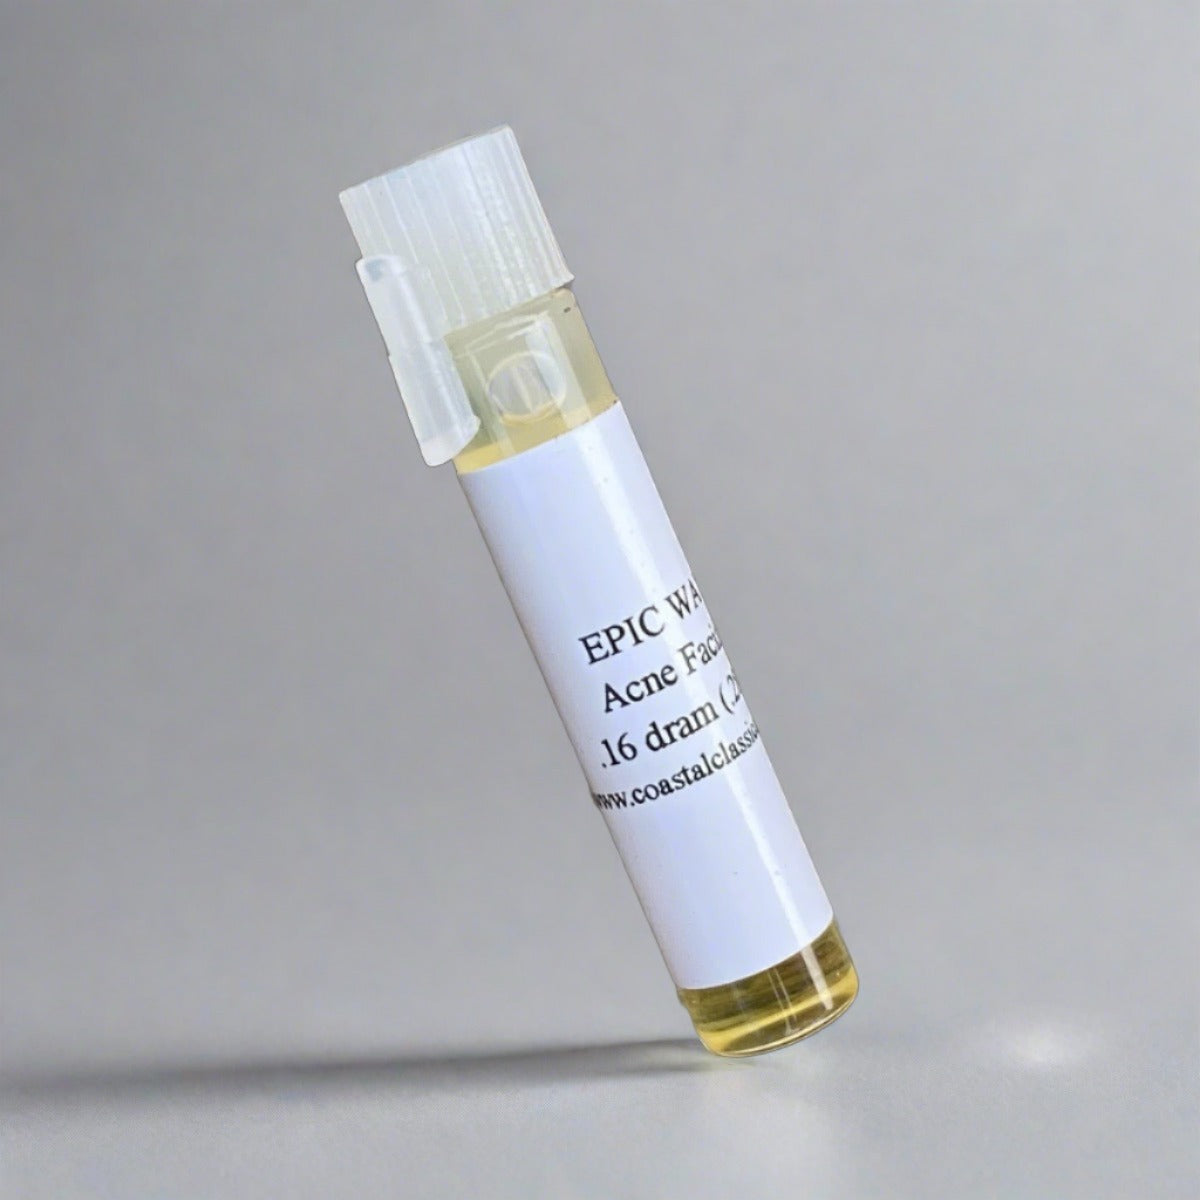 Mini size select plant-based botanical facial oil